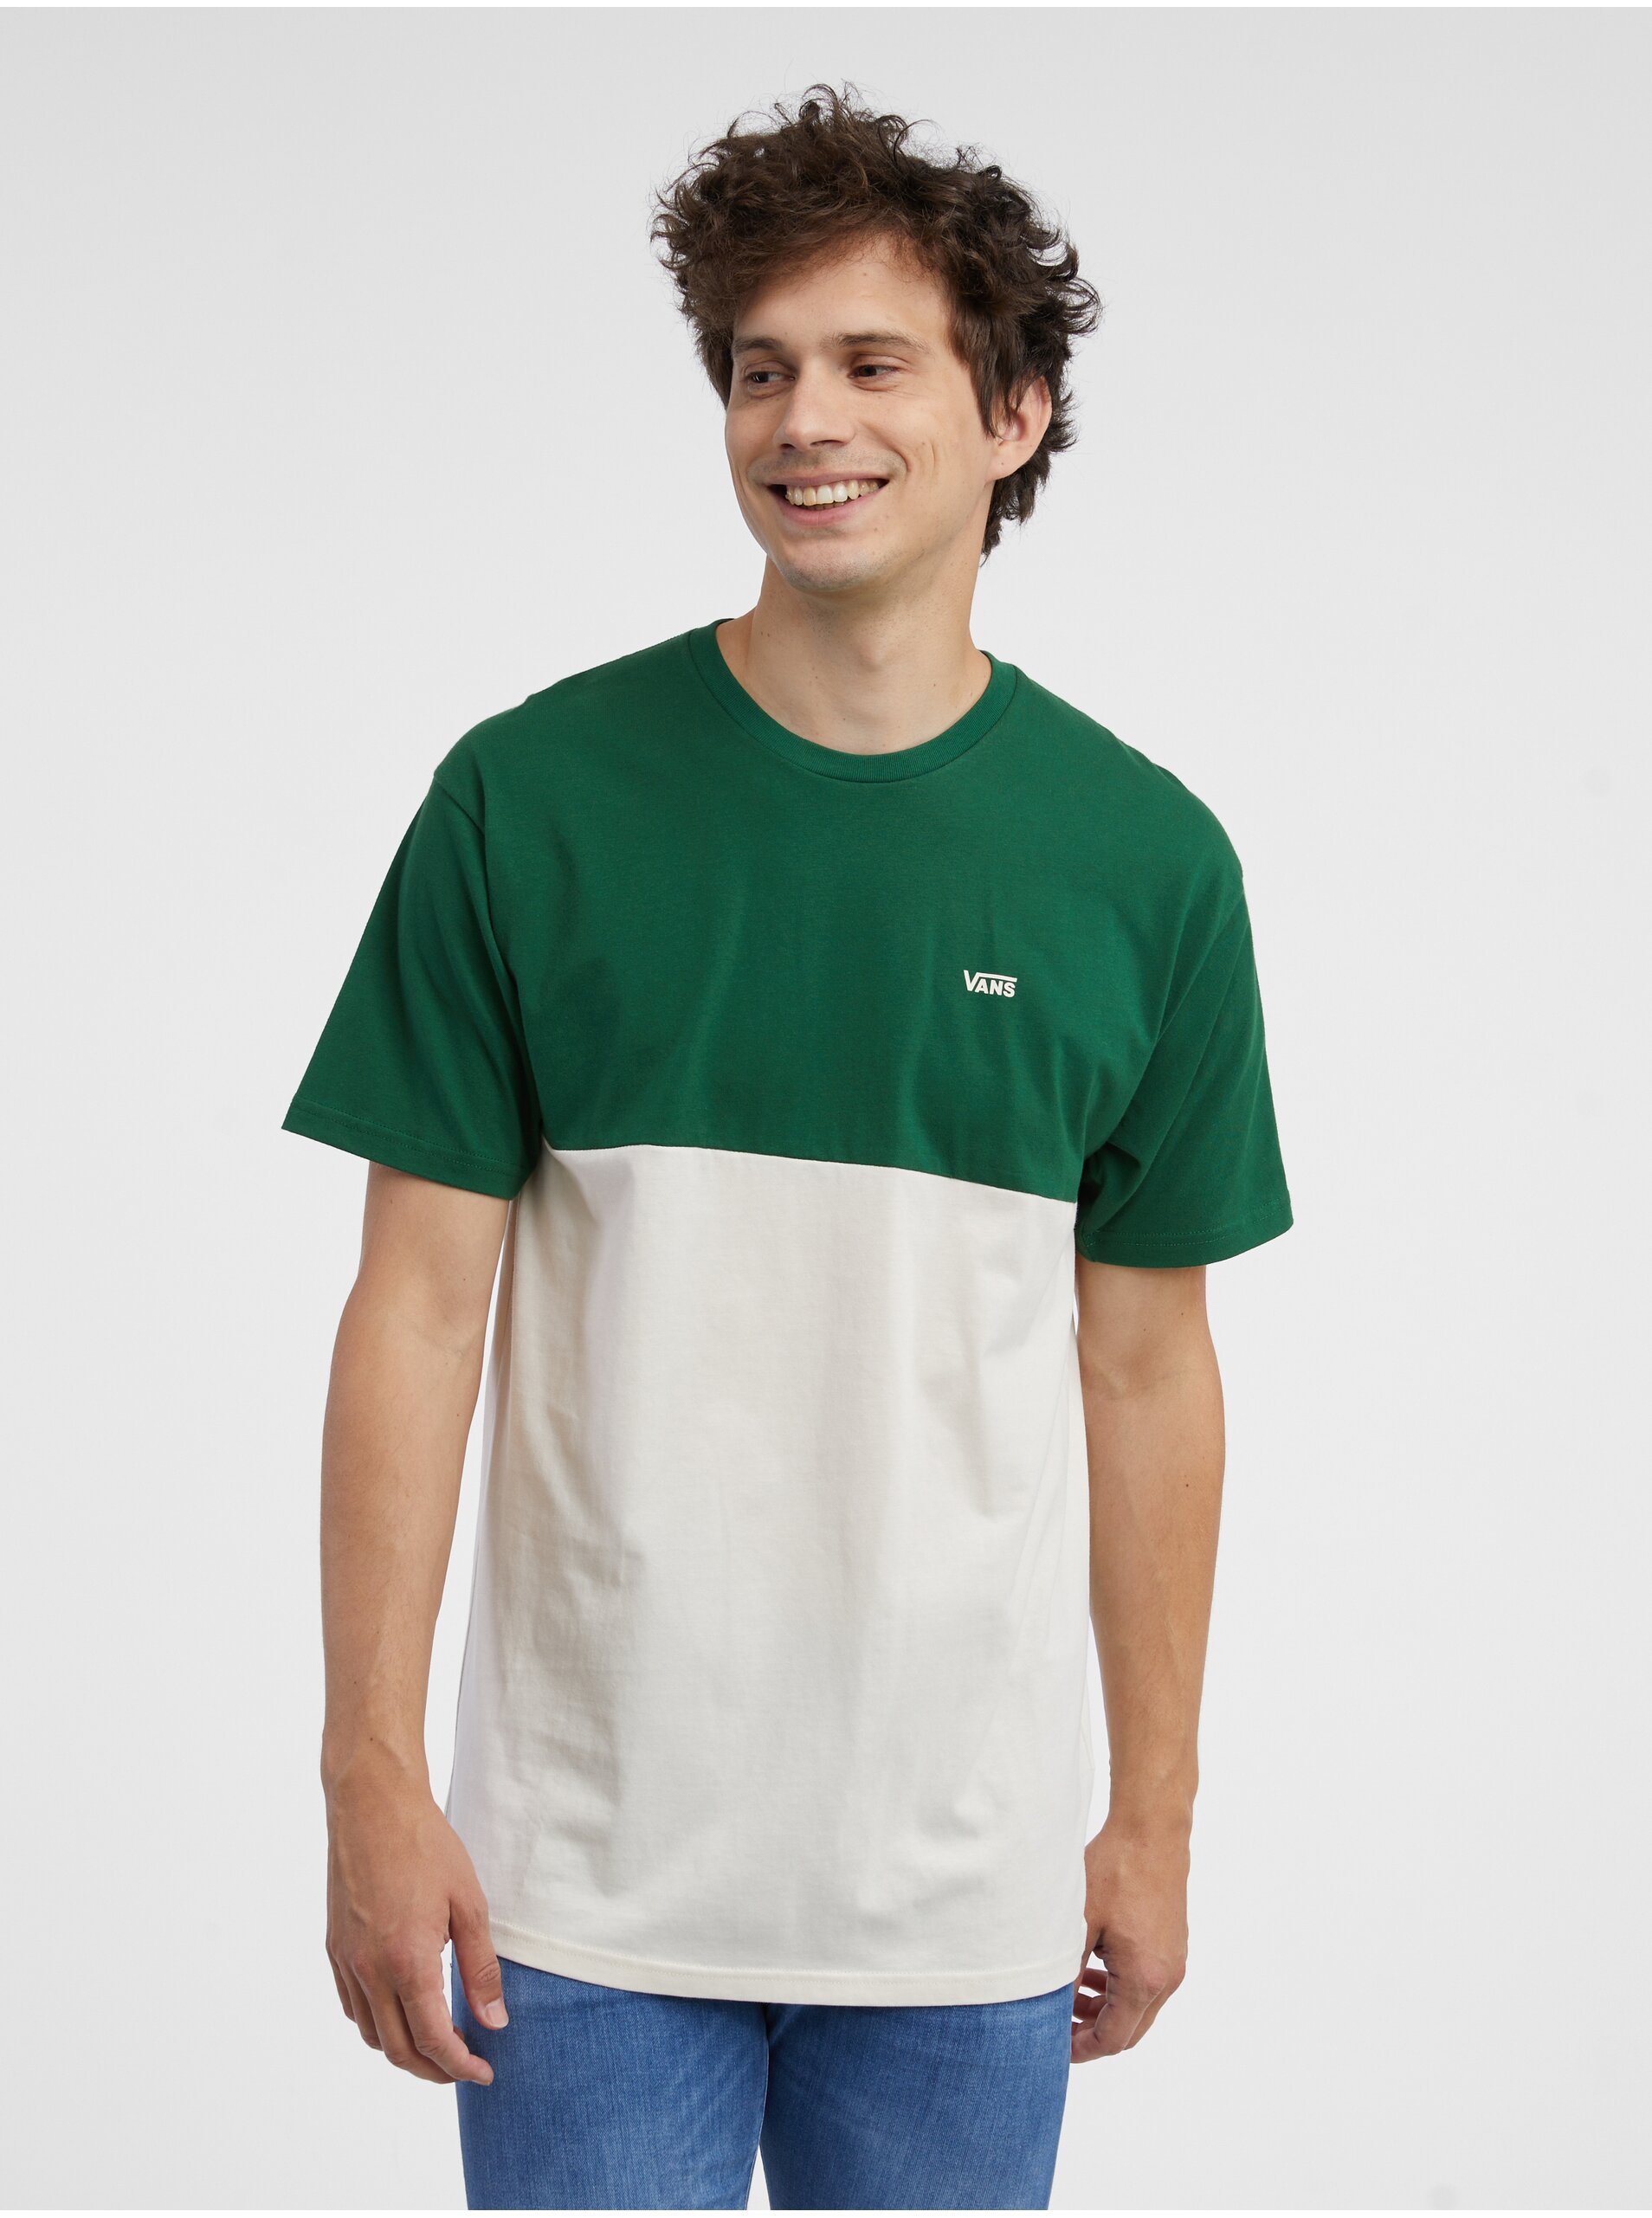 White-green Men's T-shirt VANS Colorblock - Men